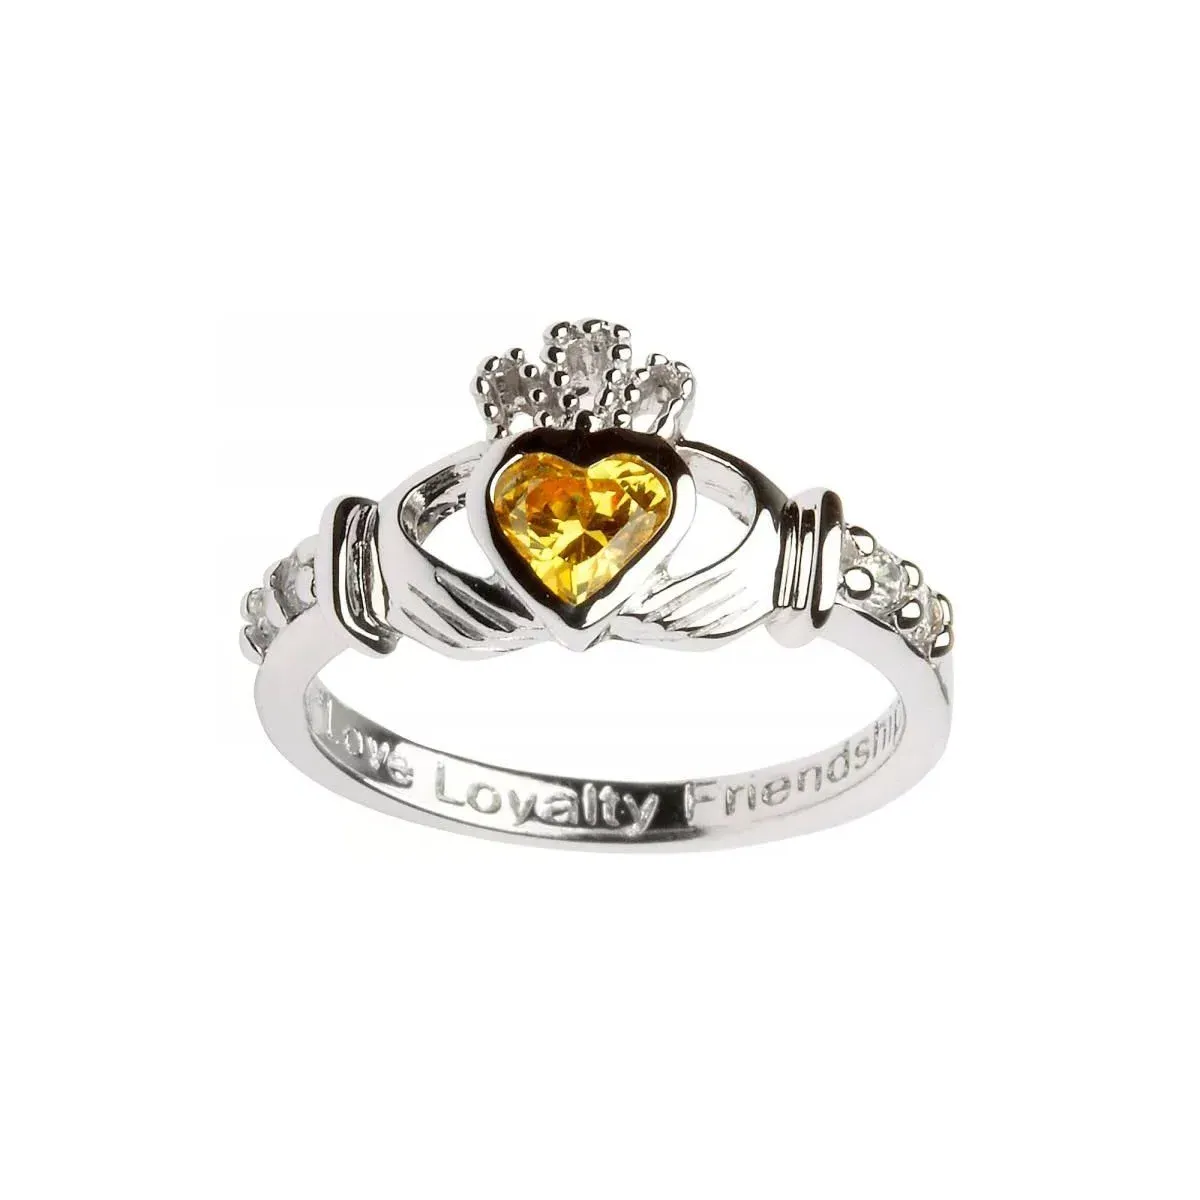 November Birthstone Claddagh Ring - Love, Loyalty, Friendship